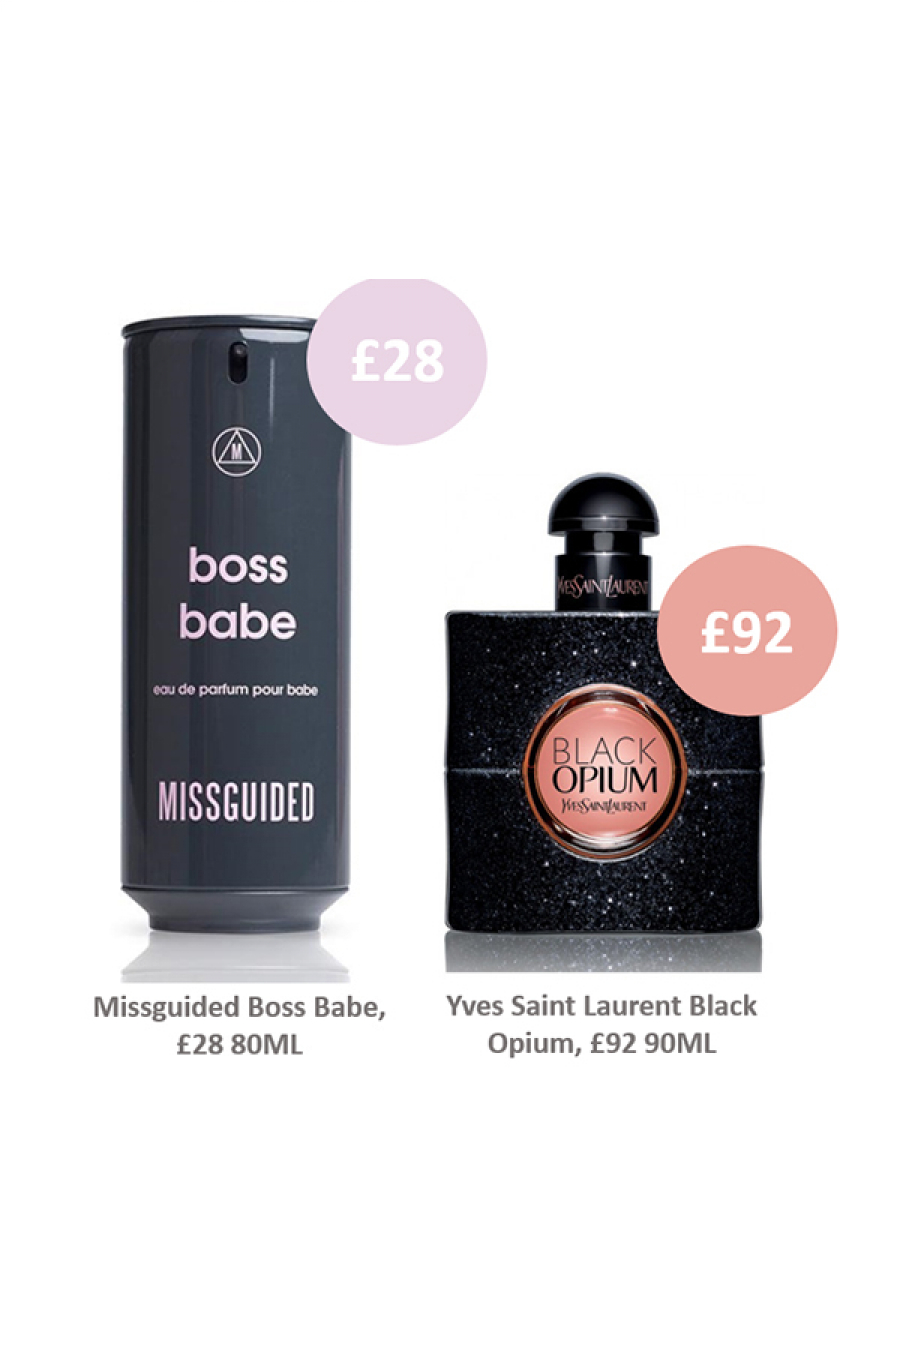 boss babe perfume price